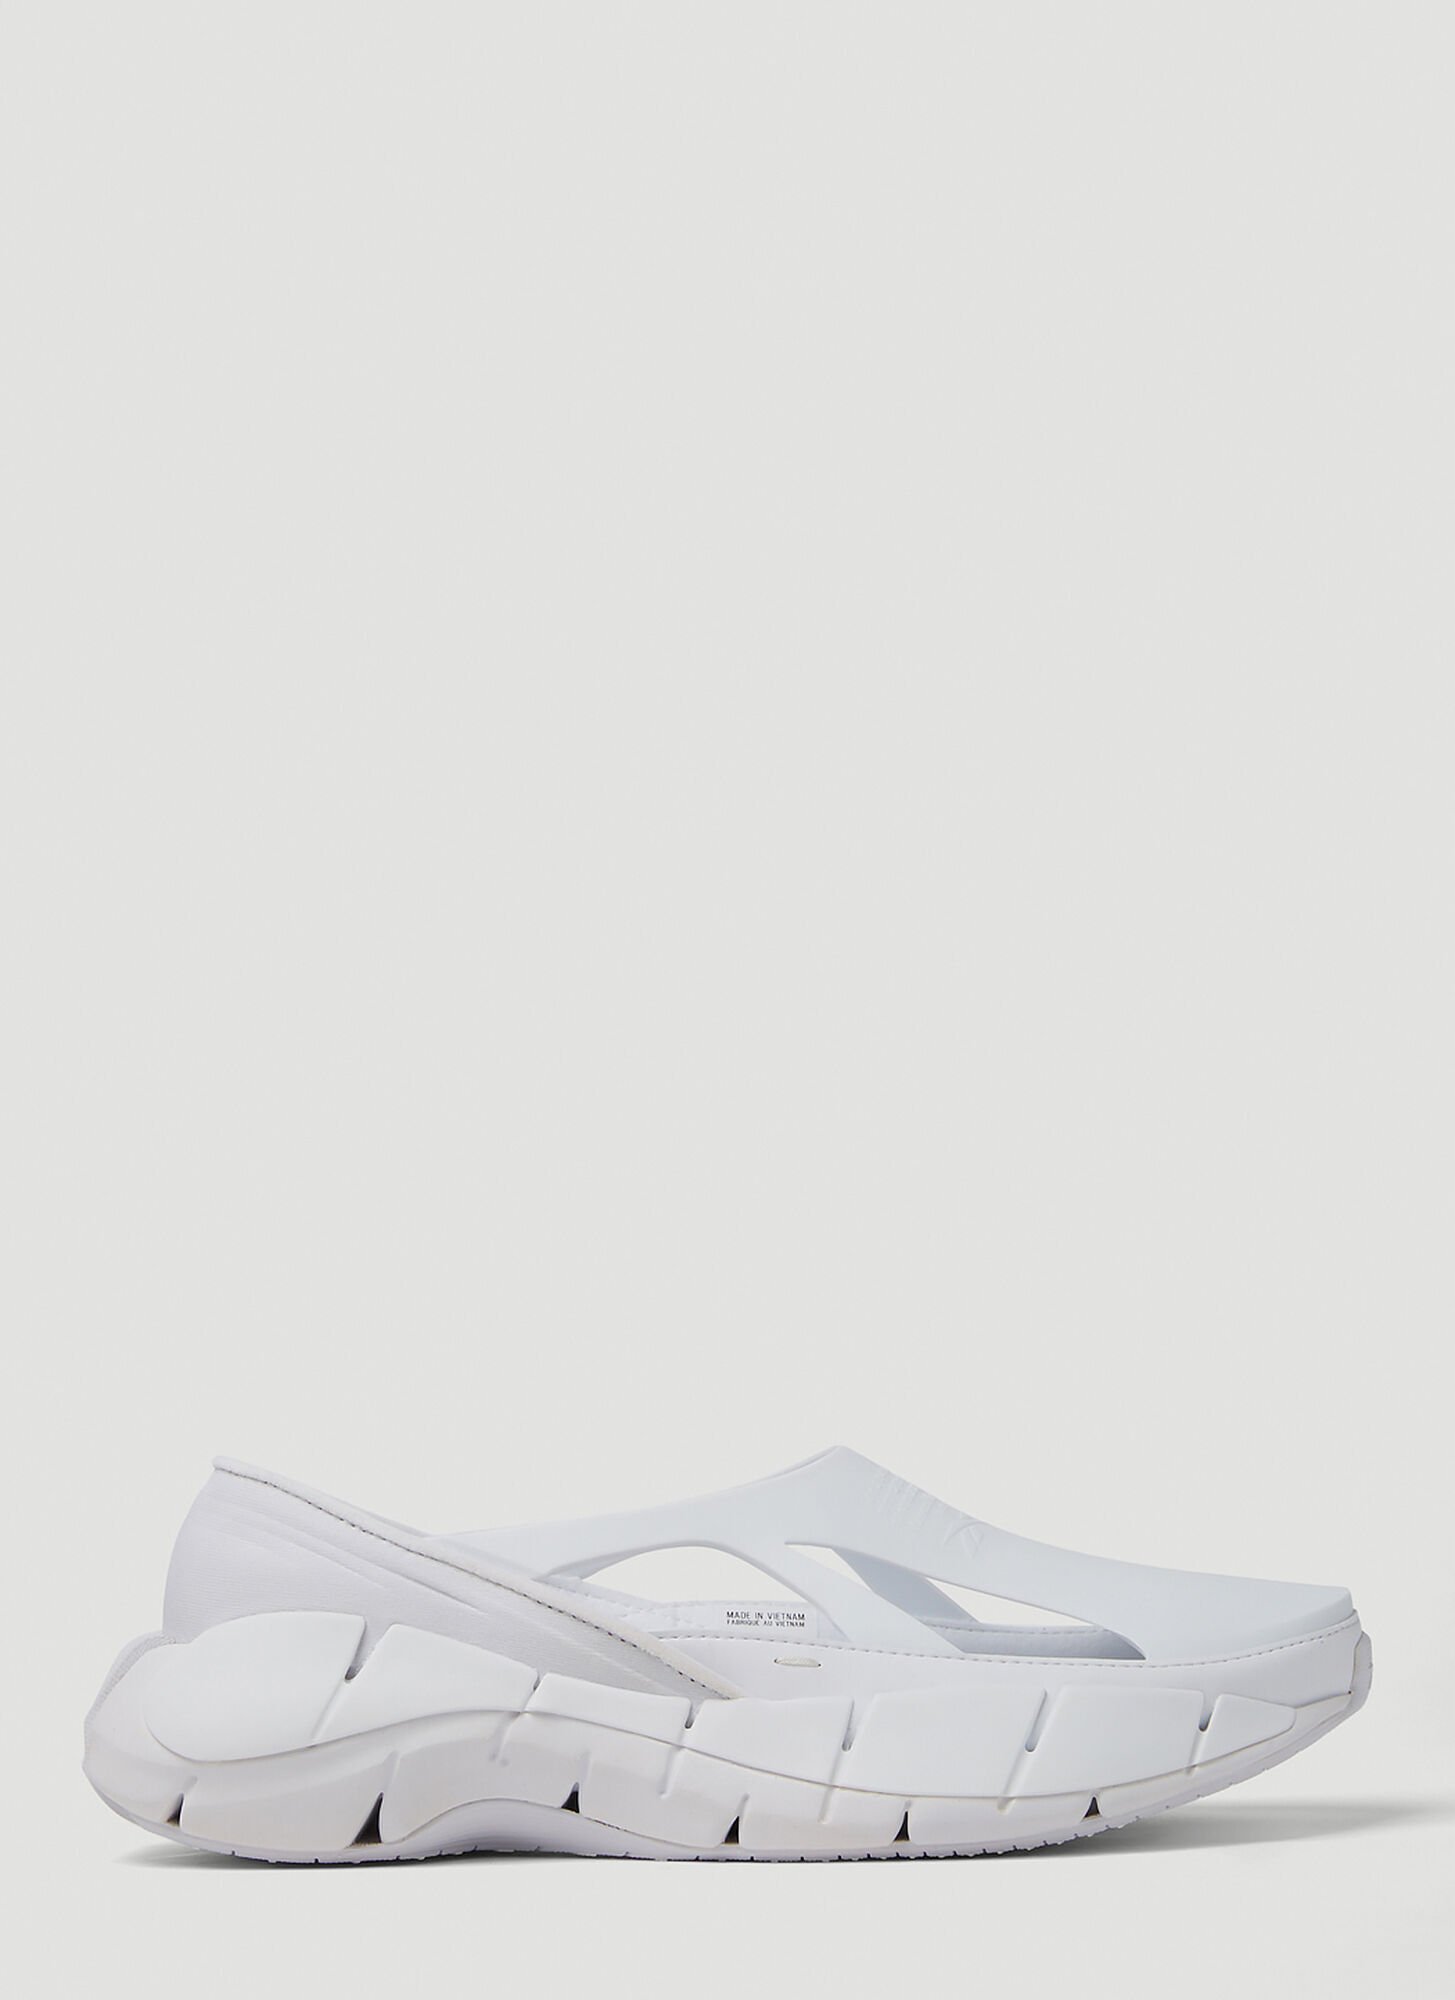 Maison Margiela X Reebok Tier 1 Croafer Sneakers Unisex White